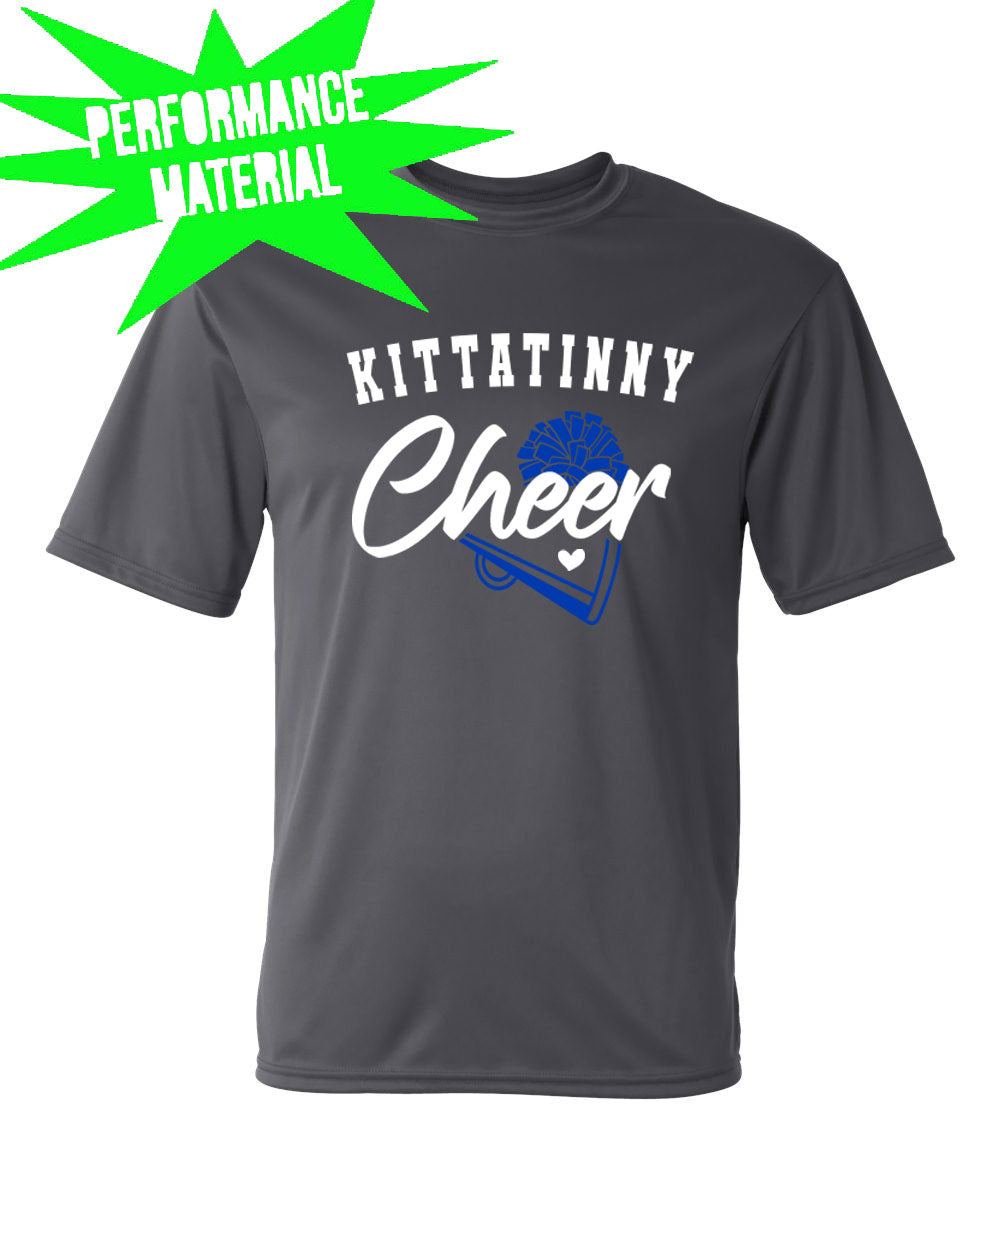 Kittatinny Cheer Performance Material T-Shirt Design 9